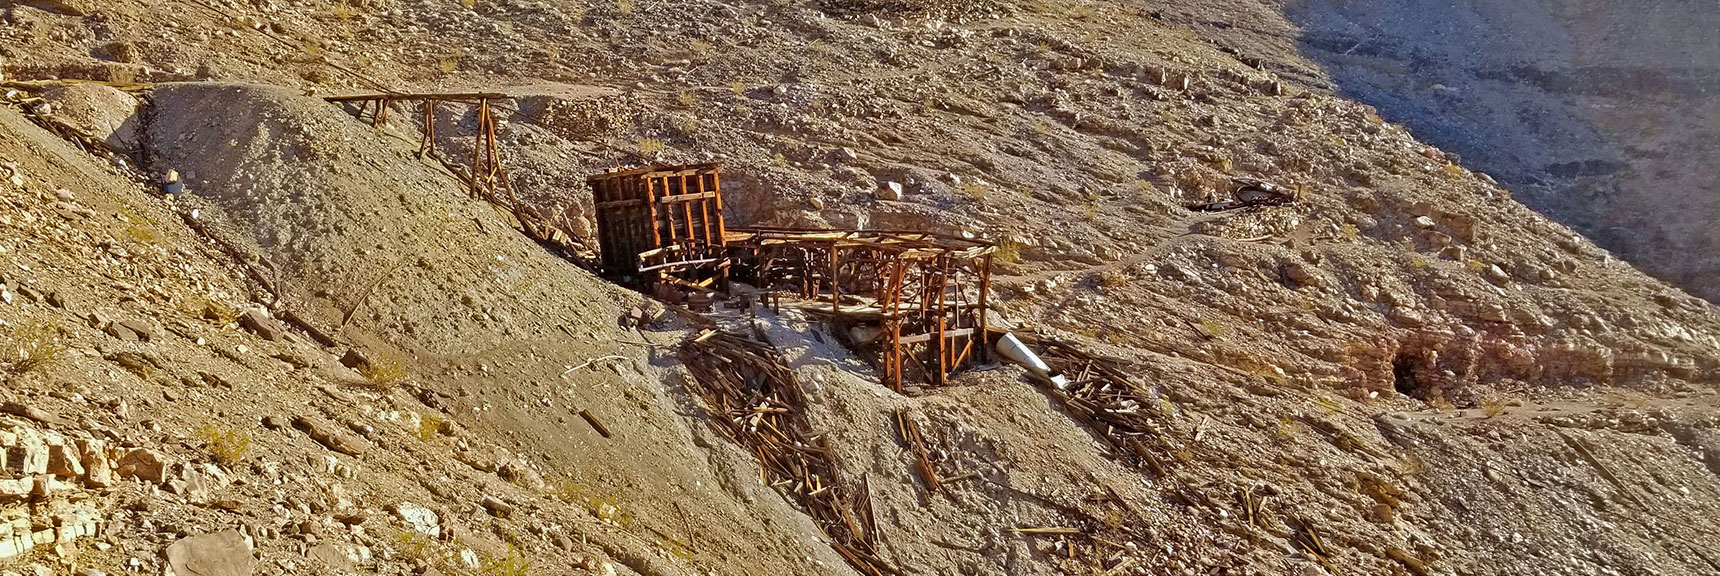 First View of Upper Stamp Mill | Keane Wonder Mine | Death Valley National Park, California